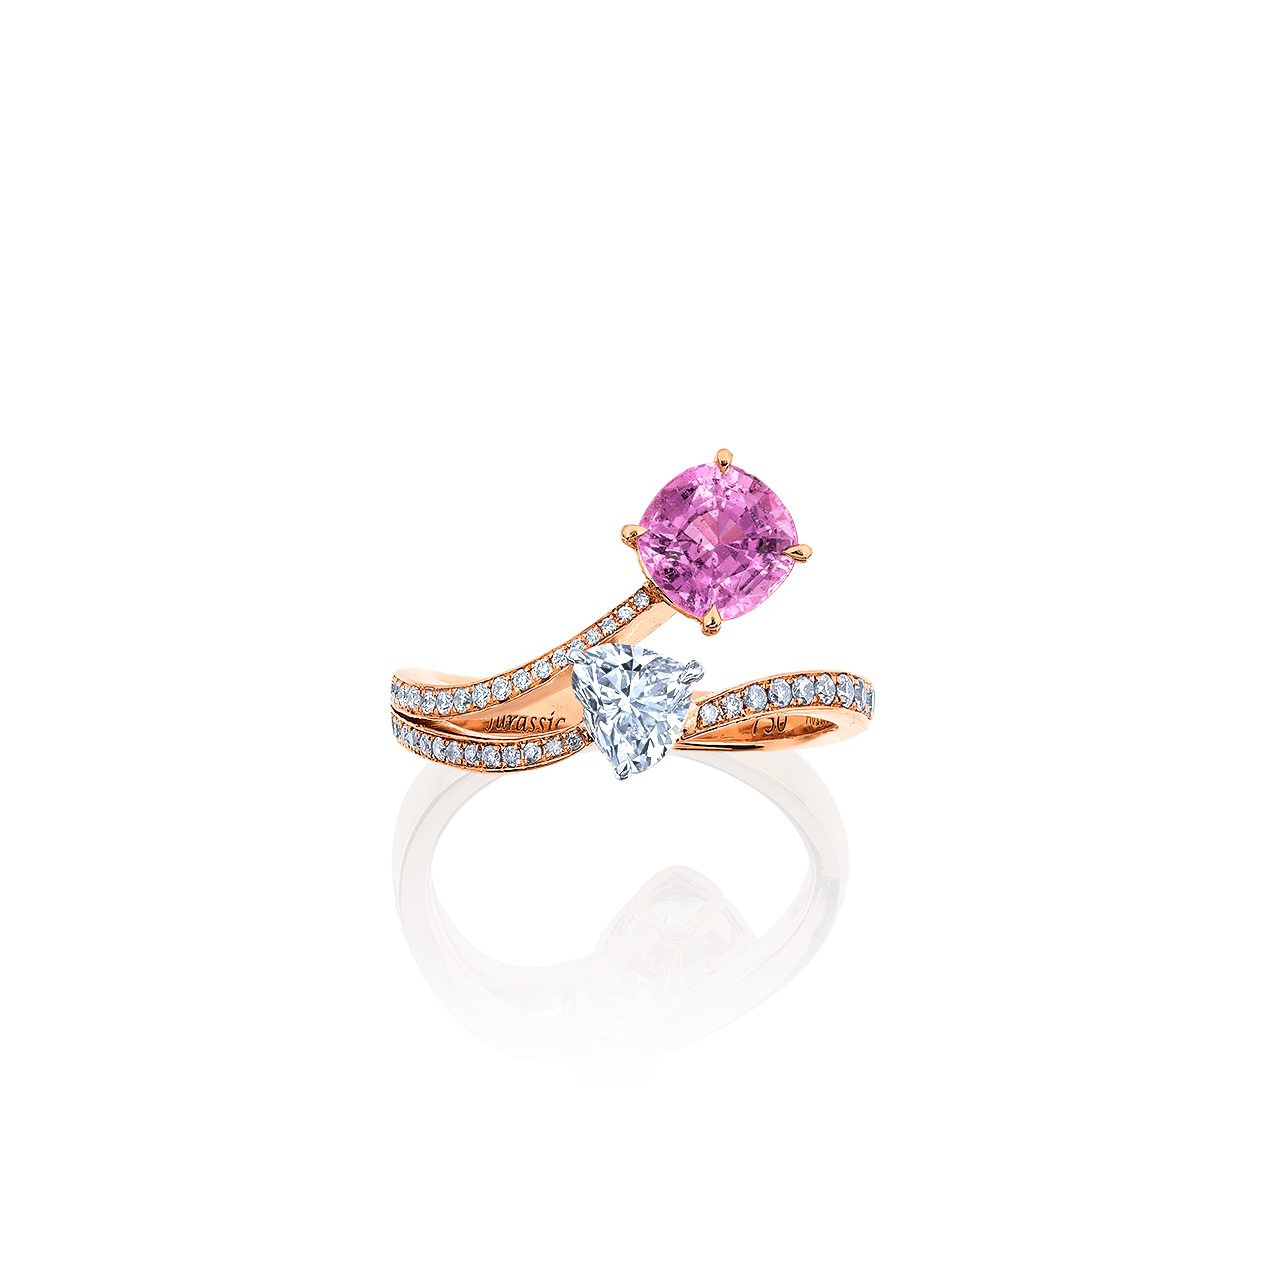 GIA 1.43克拉 粉剛鑽石戒
GIA Pink Sapphire Diamond Ring